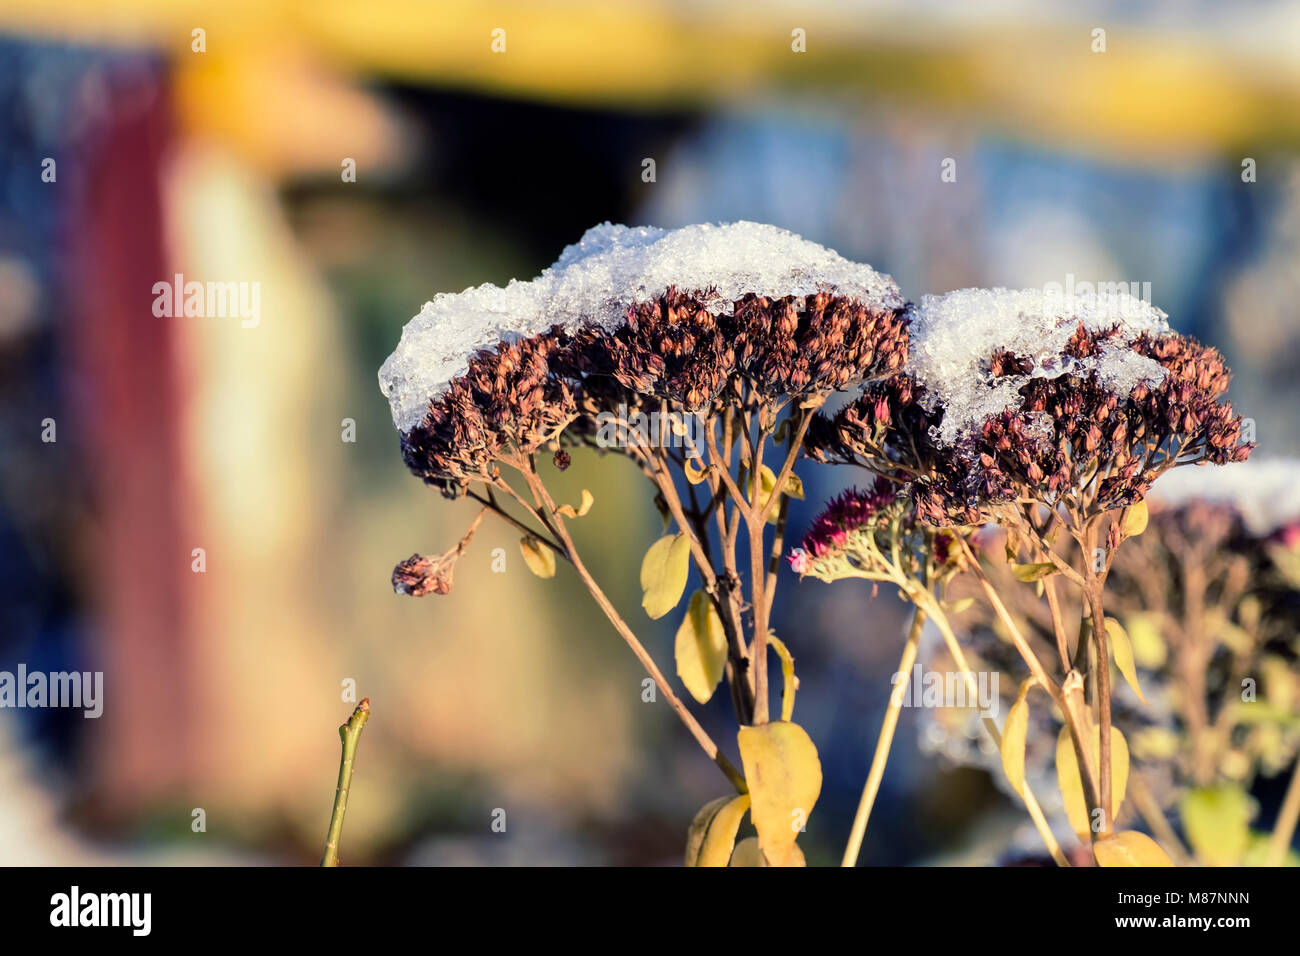 Dry flowers of gravel root sprinkled with snow (Eutrochium purpureum) Stock Photo